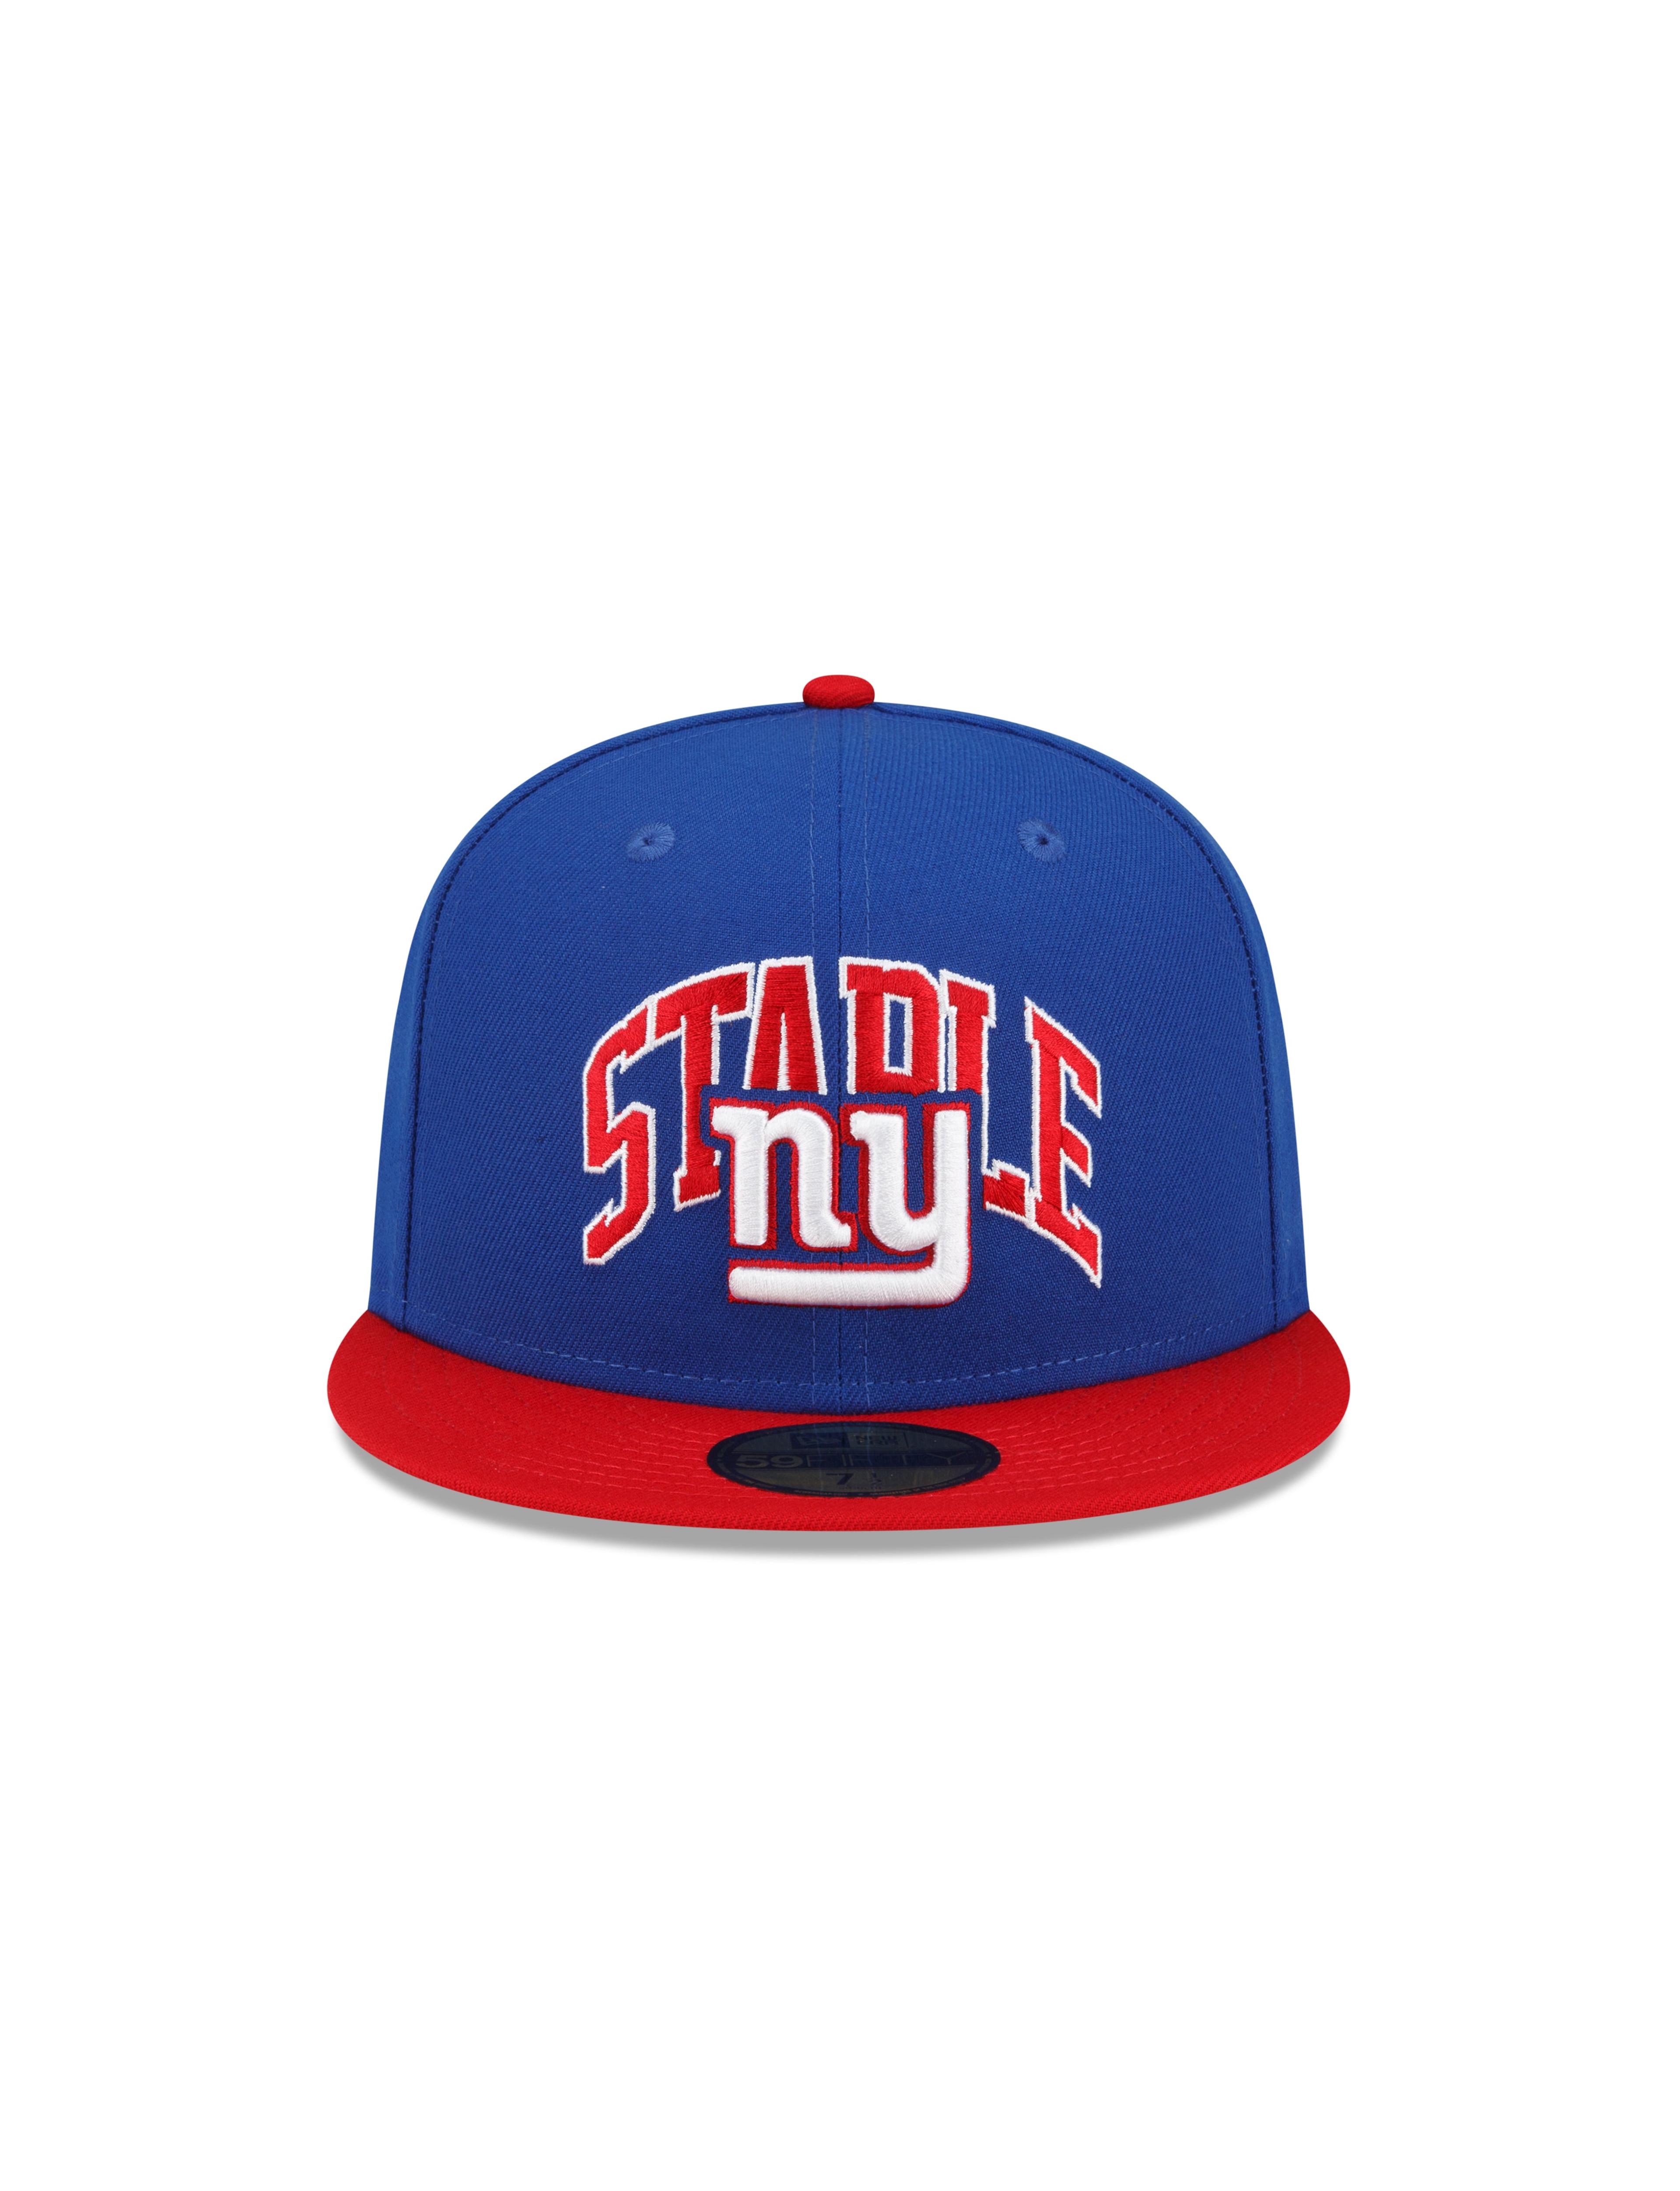 Staple x NFL x New Era 59FIFTY Cap New York Giants